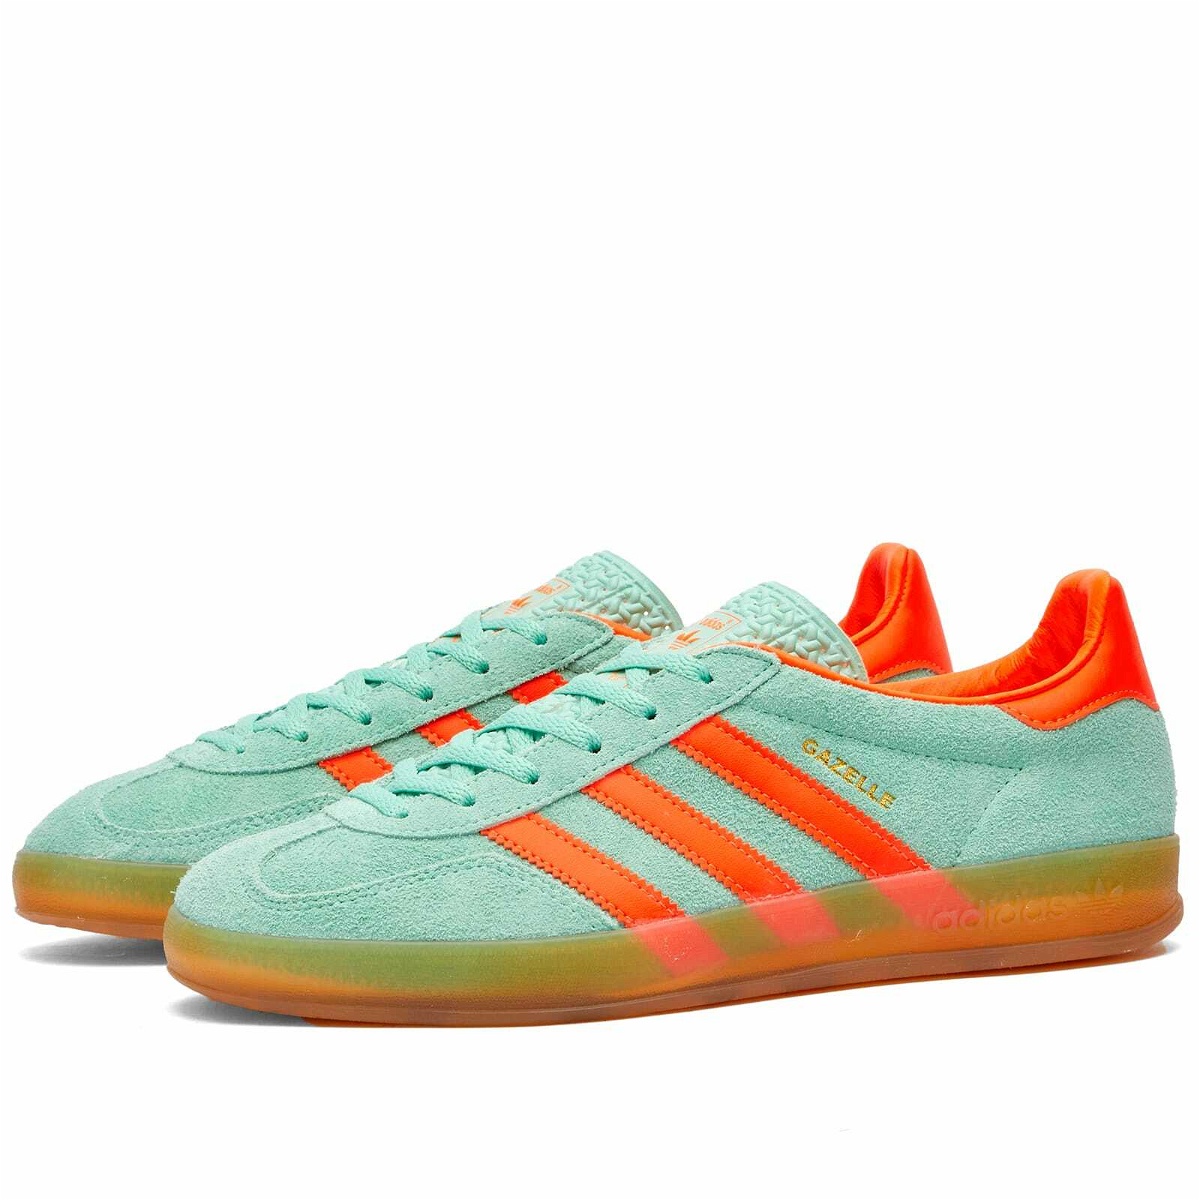 Adidas Gazelle Indoor W adidas Mint/Orange Sneakers in Pulse